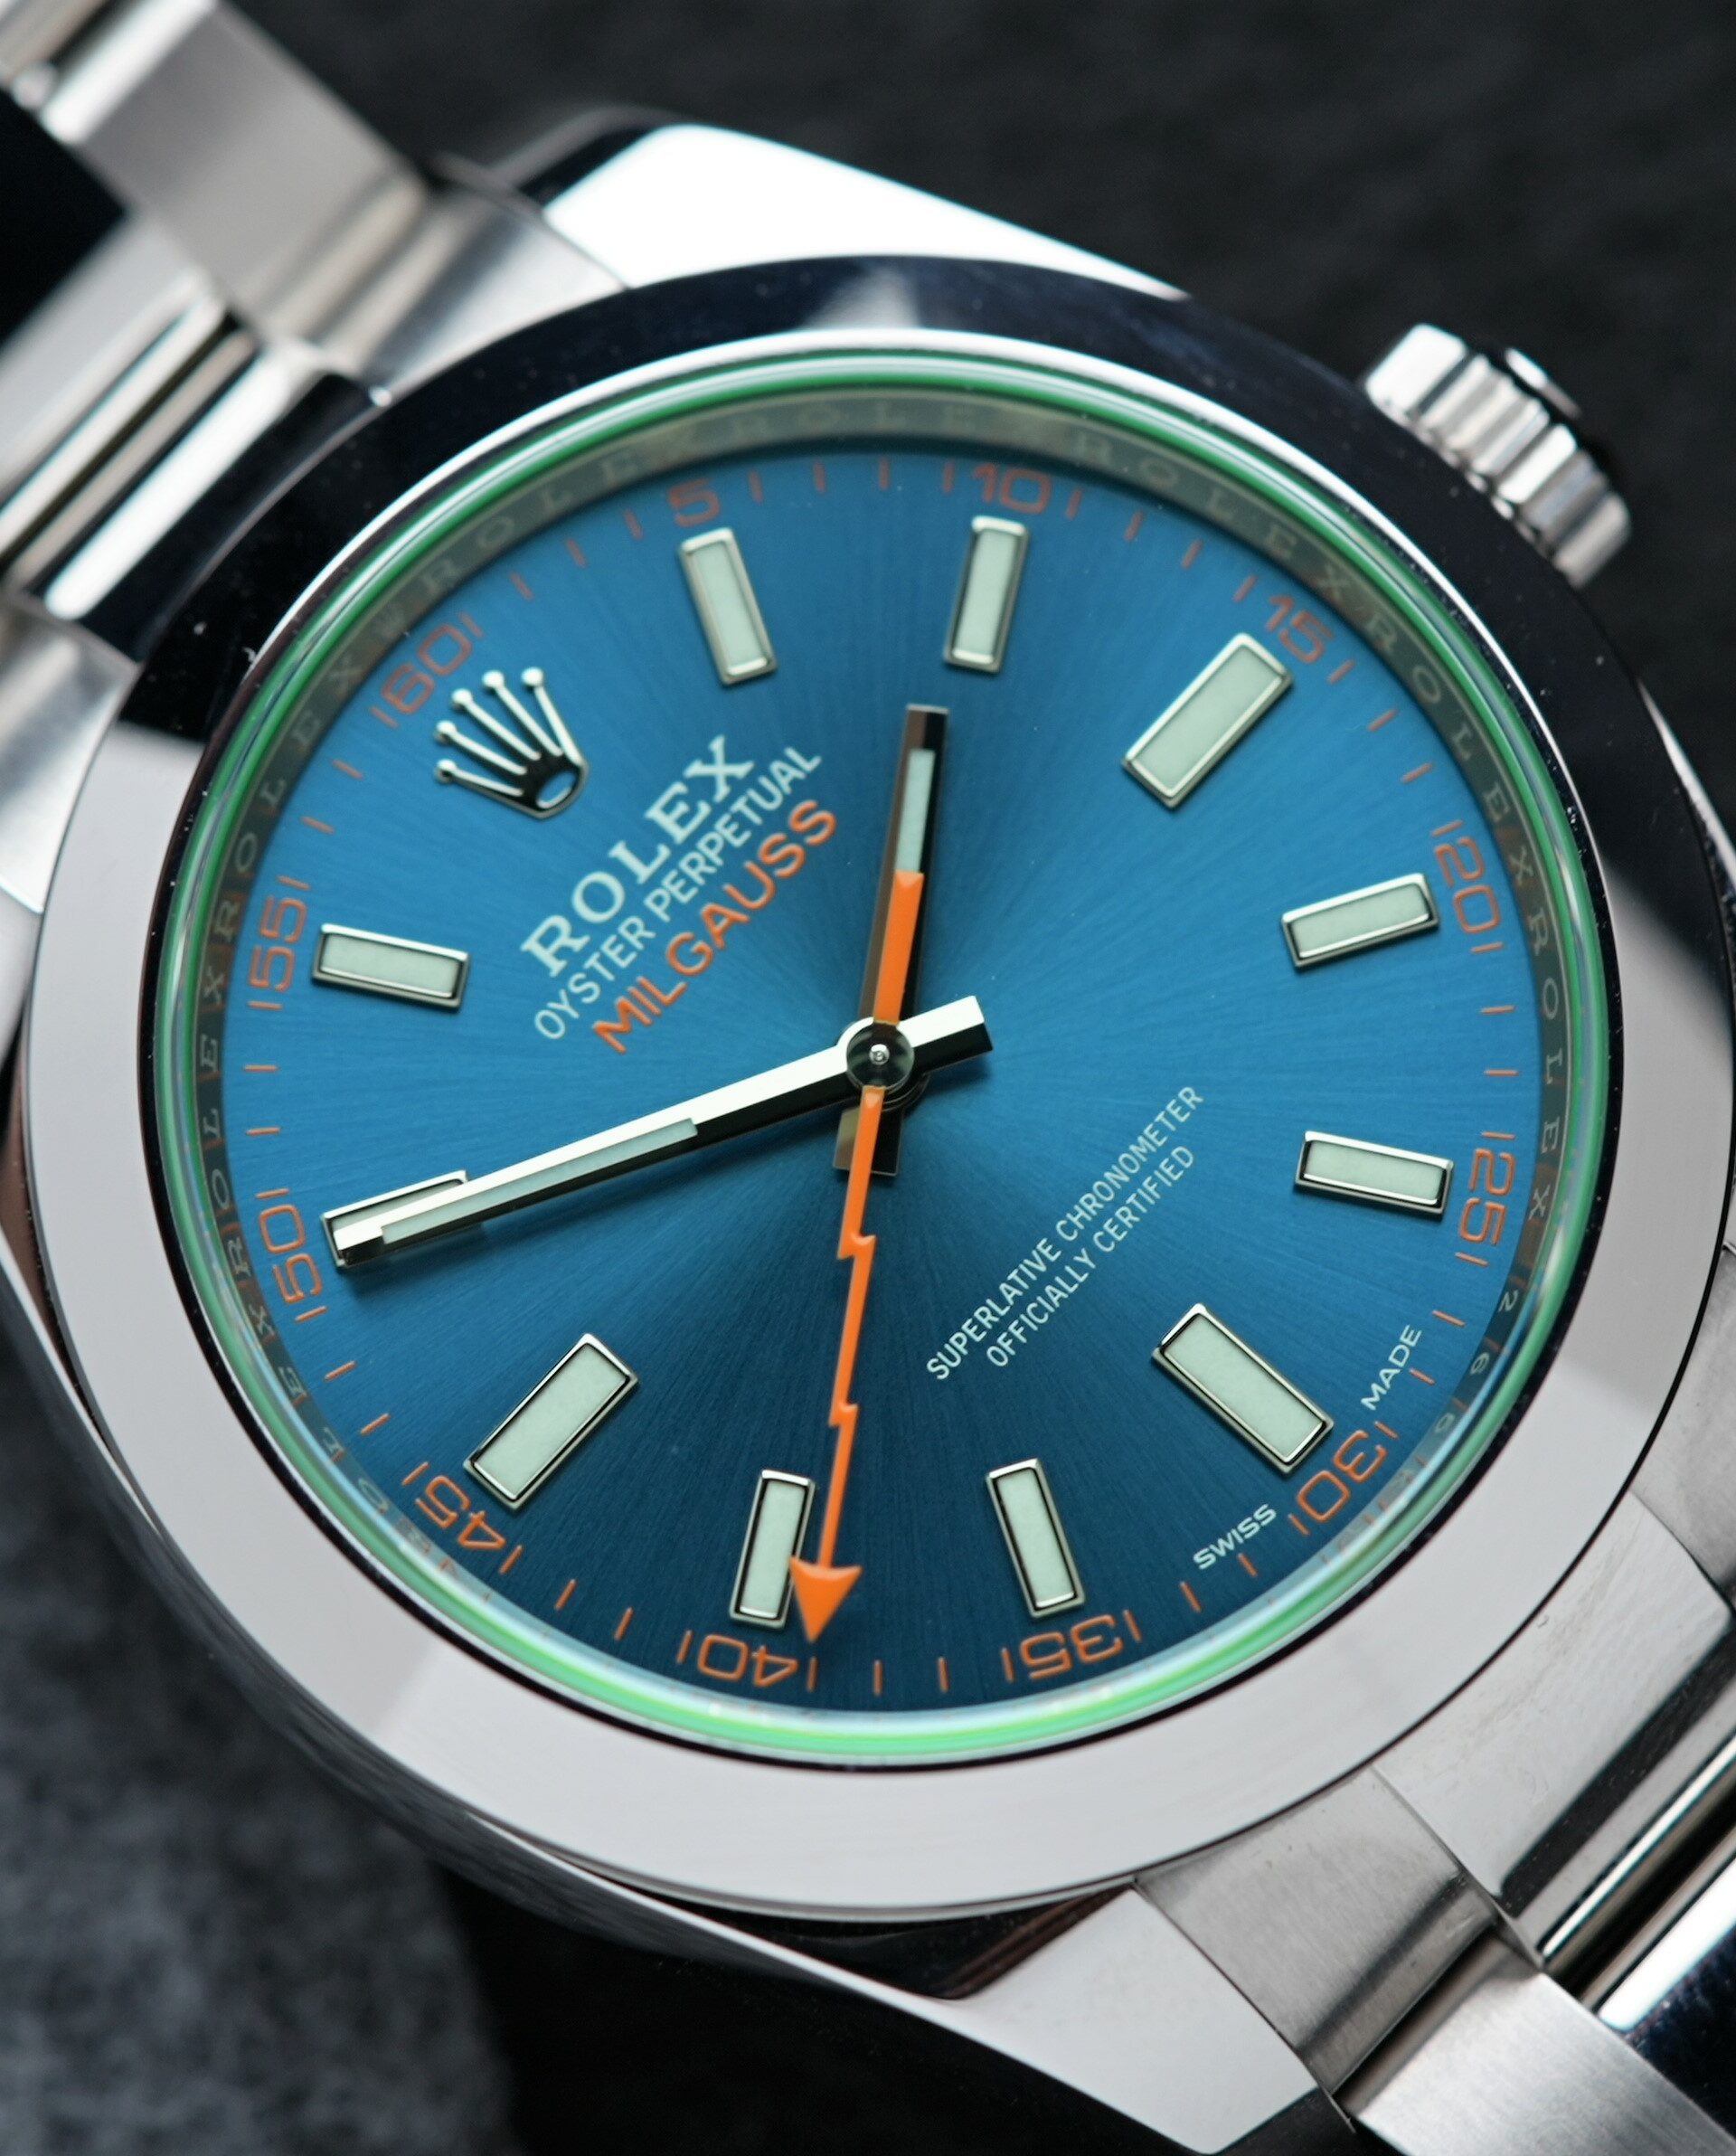 Rolex Milgauss Z Blue UNWORN 116400GV wristwatch displayed closeup.